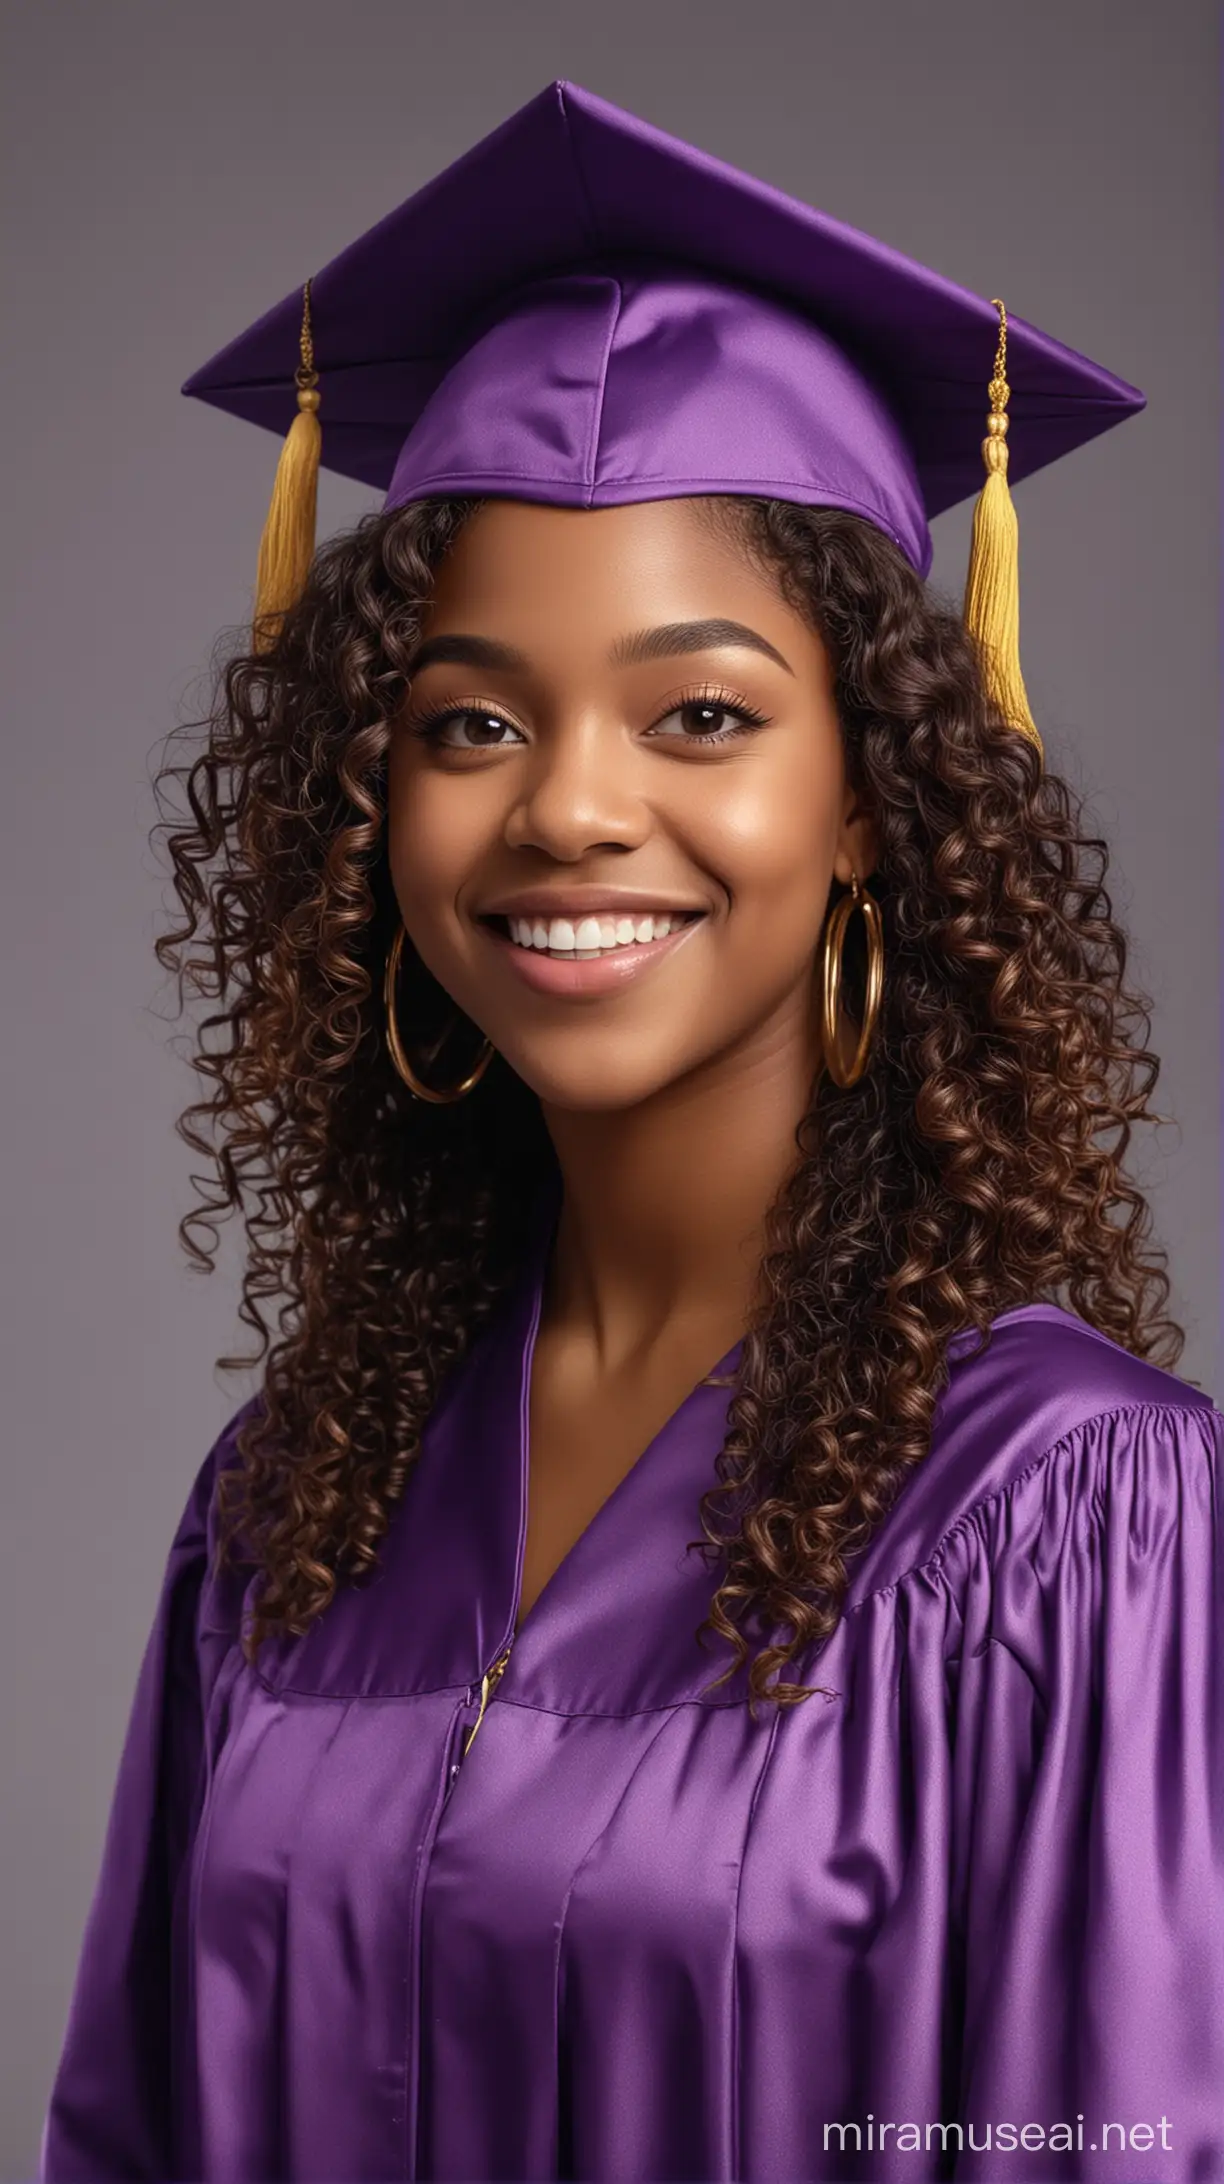 Elegant African American Graduation Portrait in Purple Cap and Gown